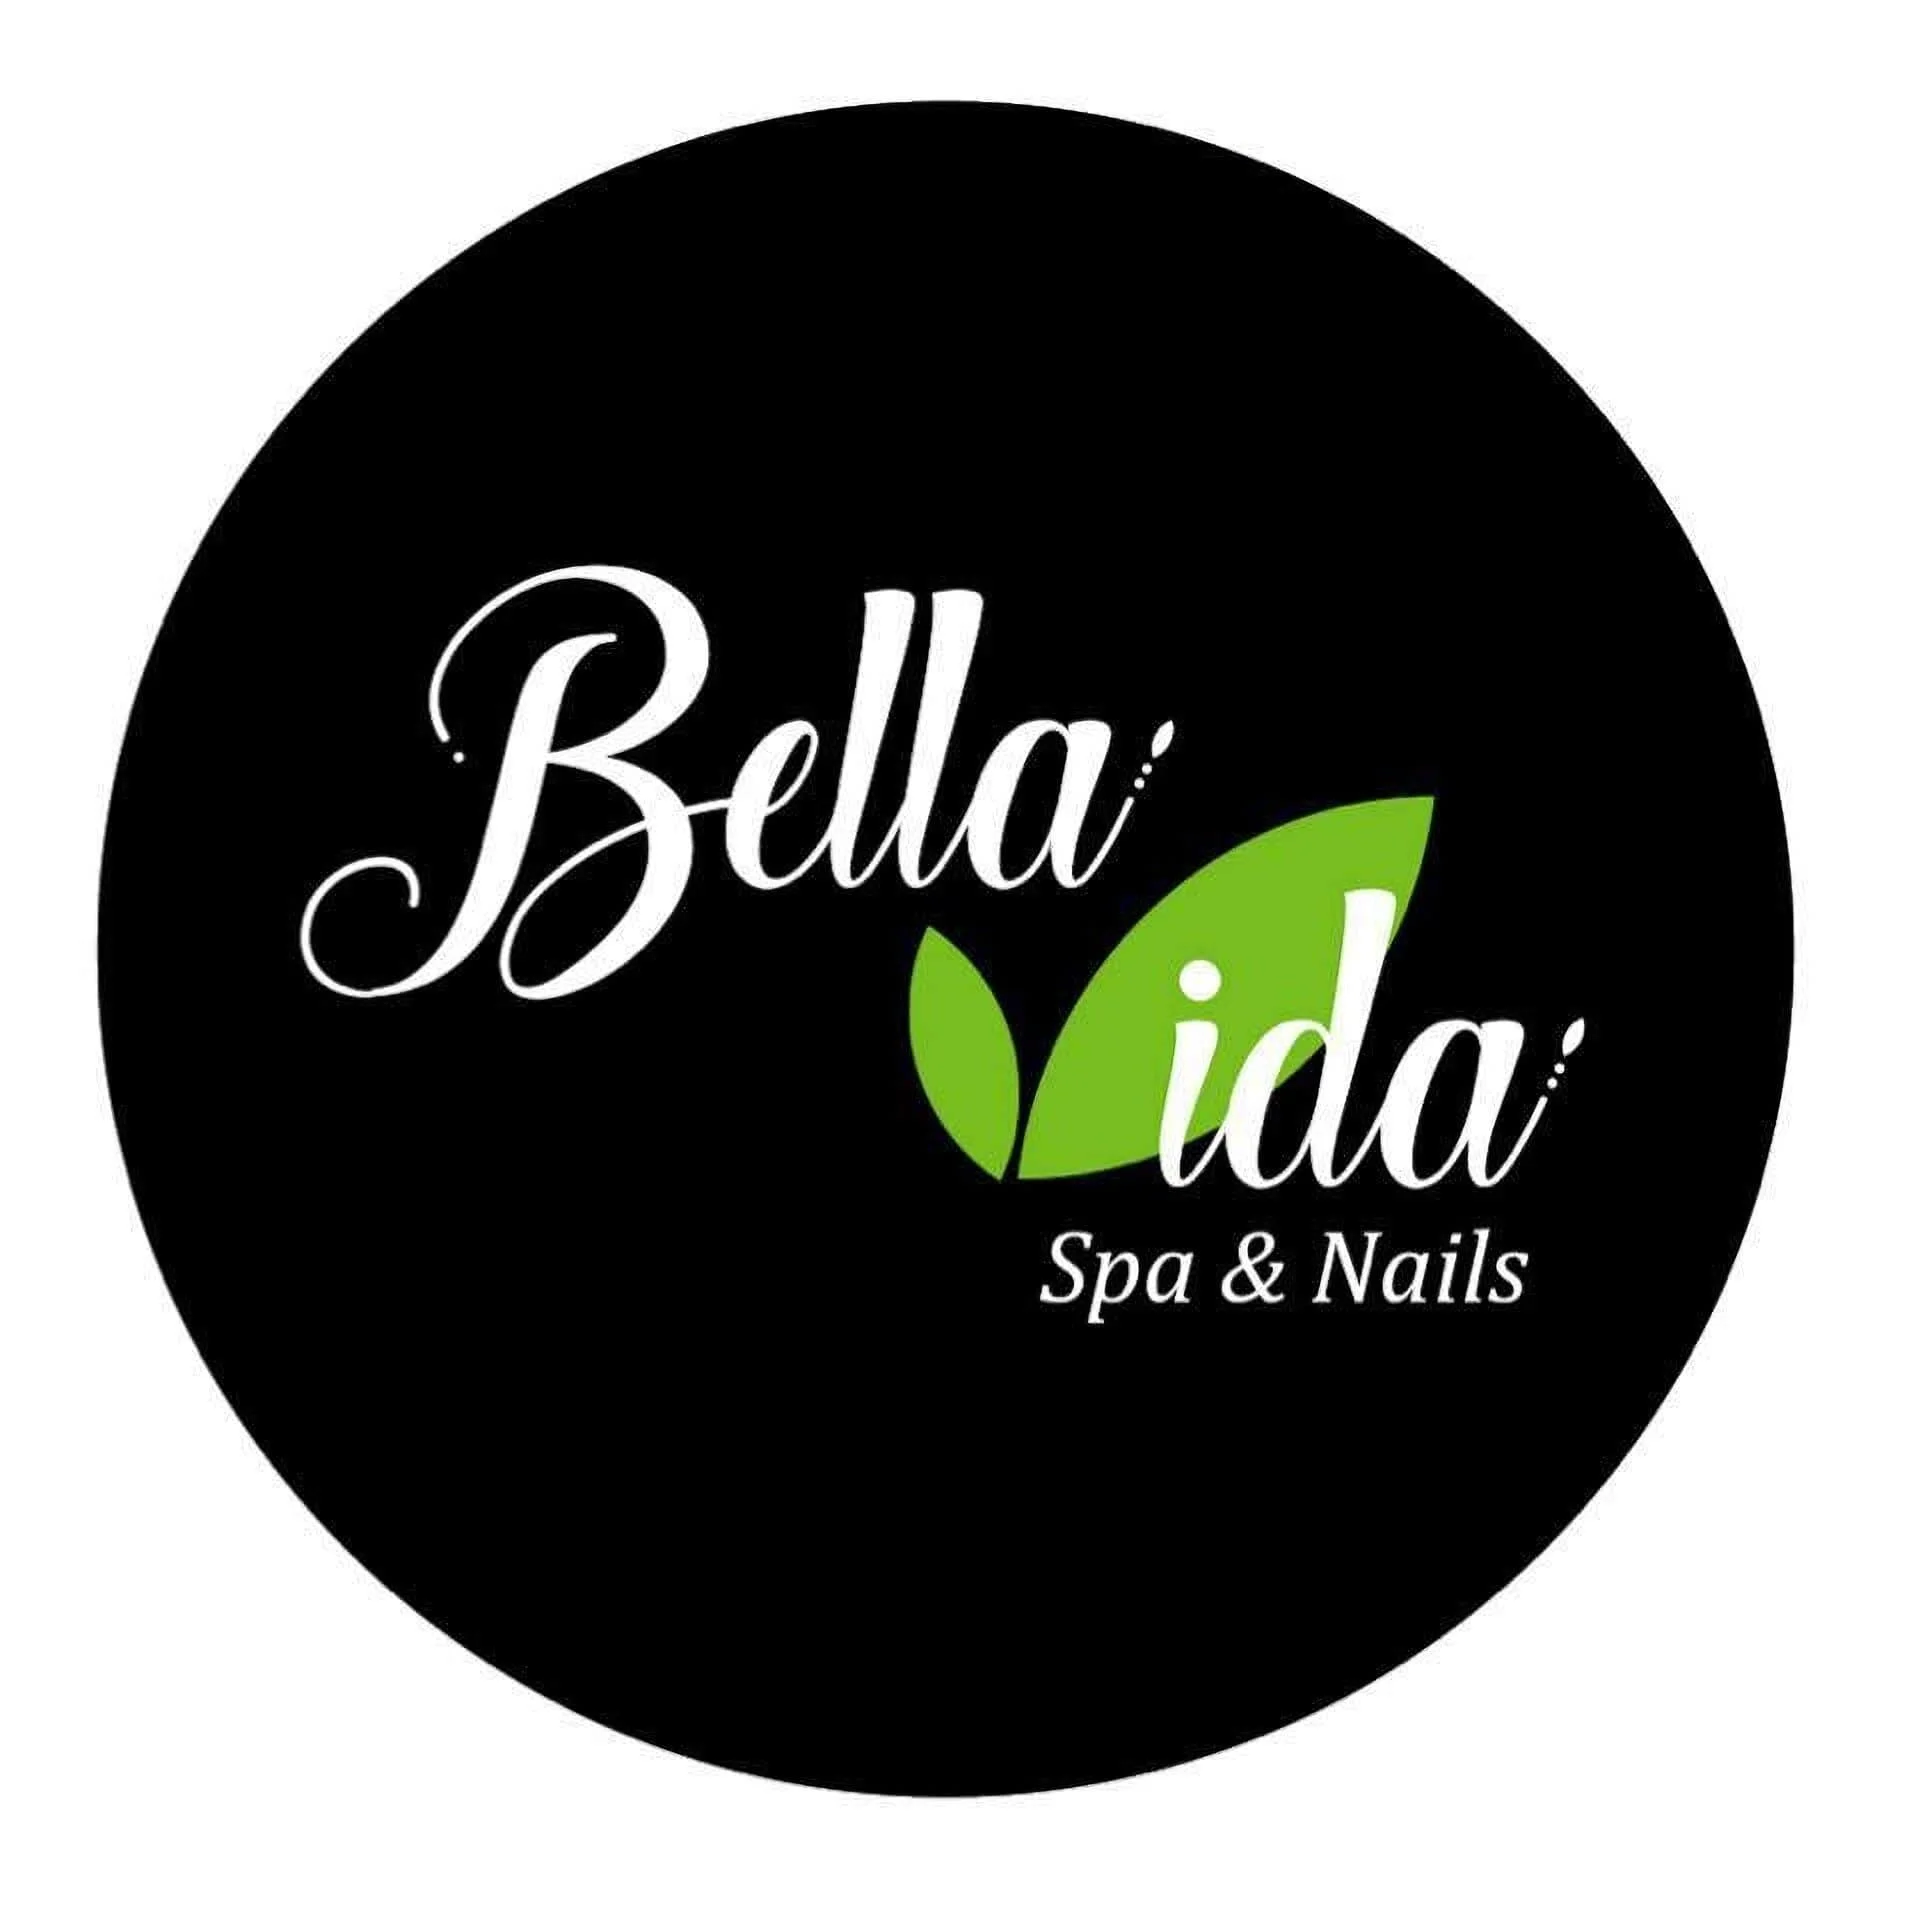 Spa-bella-vida-spa-nails-12273